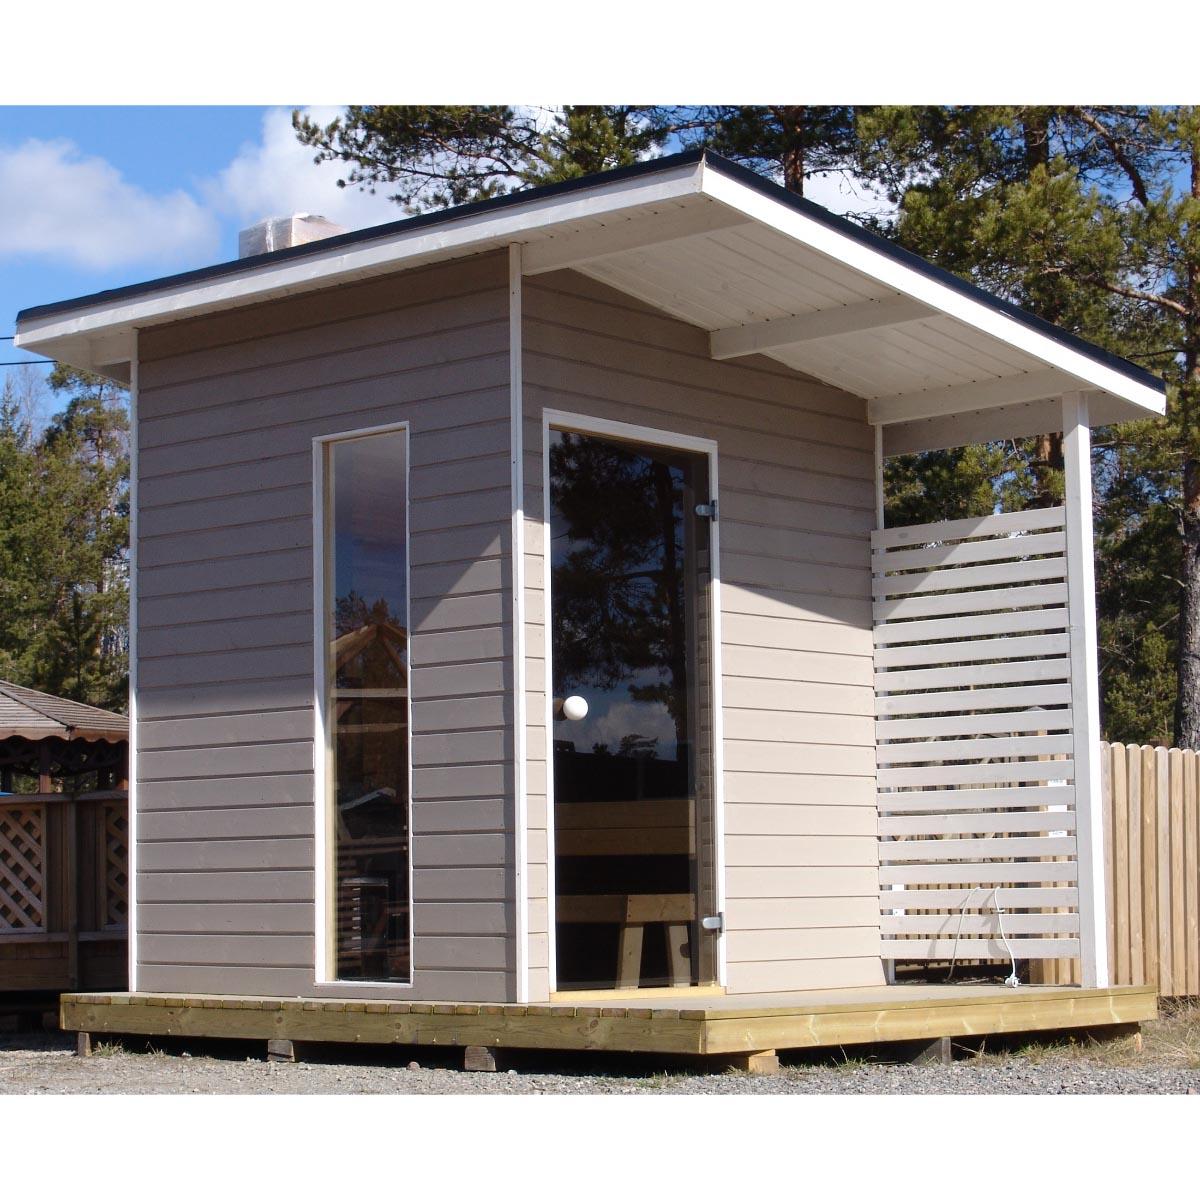 Narvi Outdoor Sauna - Narvi Oy Narvi DIY sauna cabin